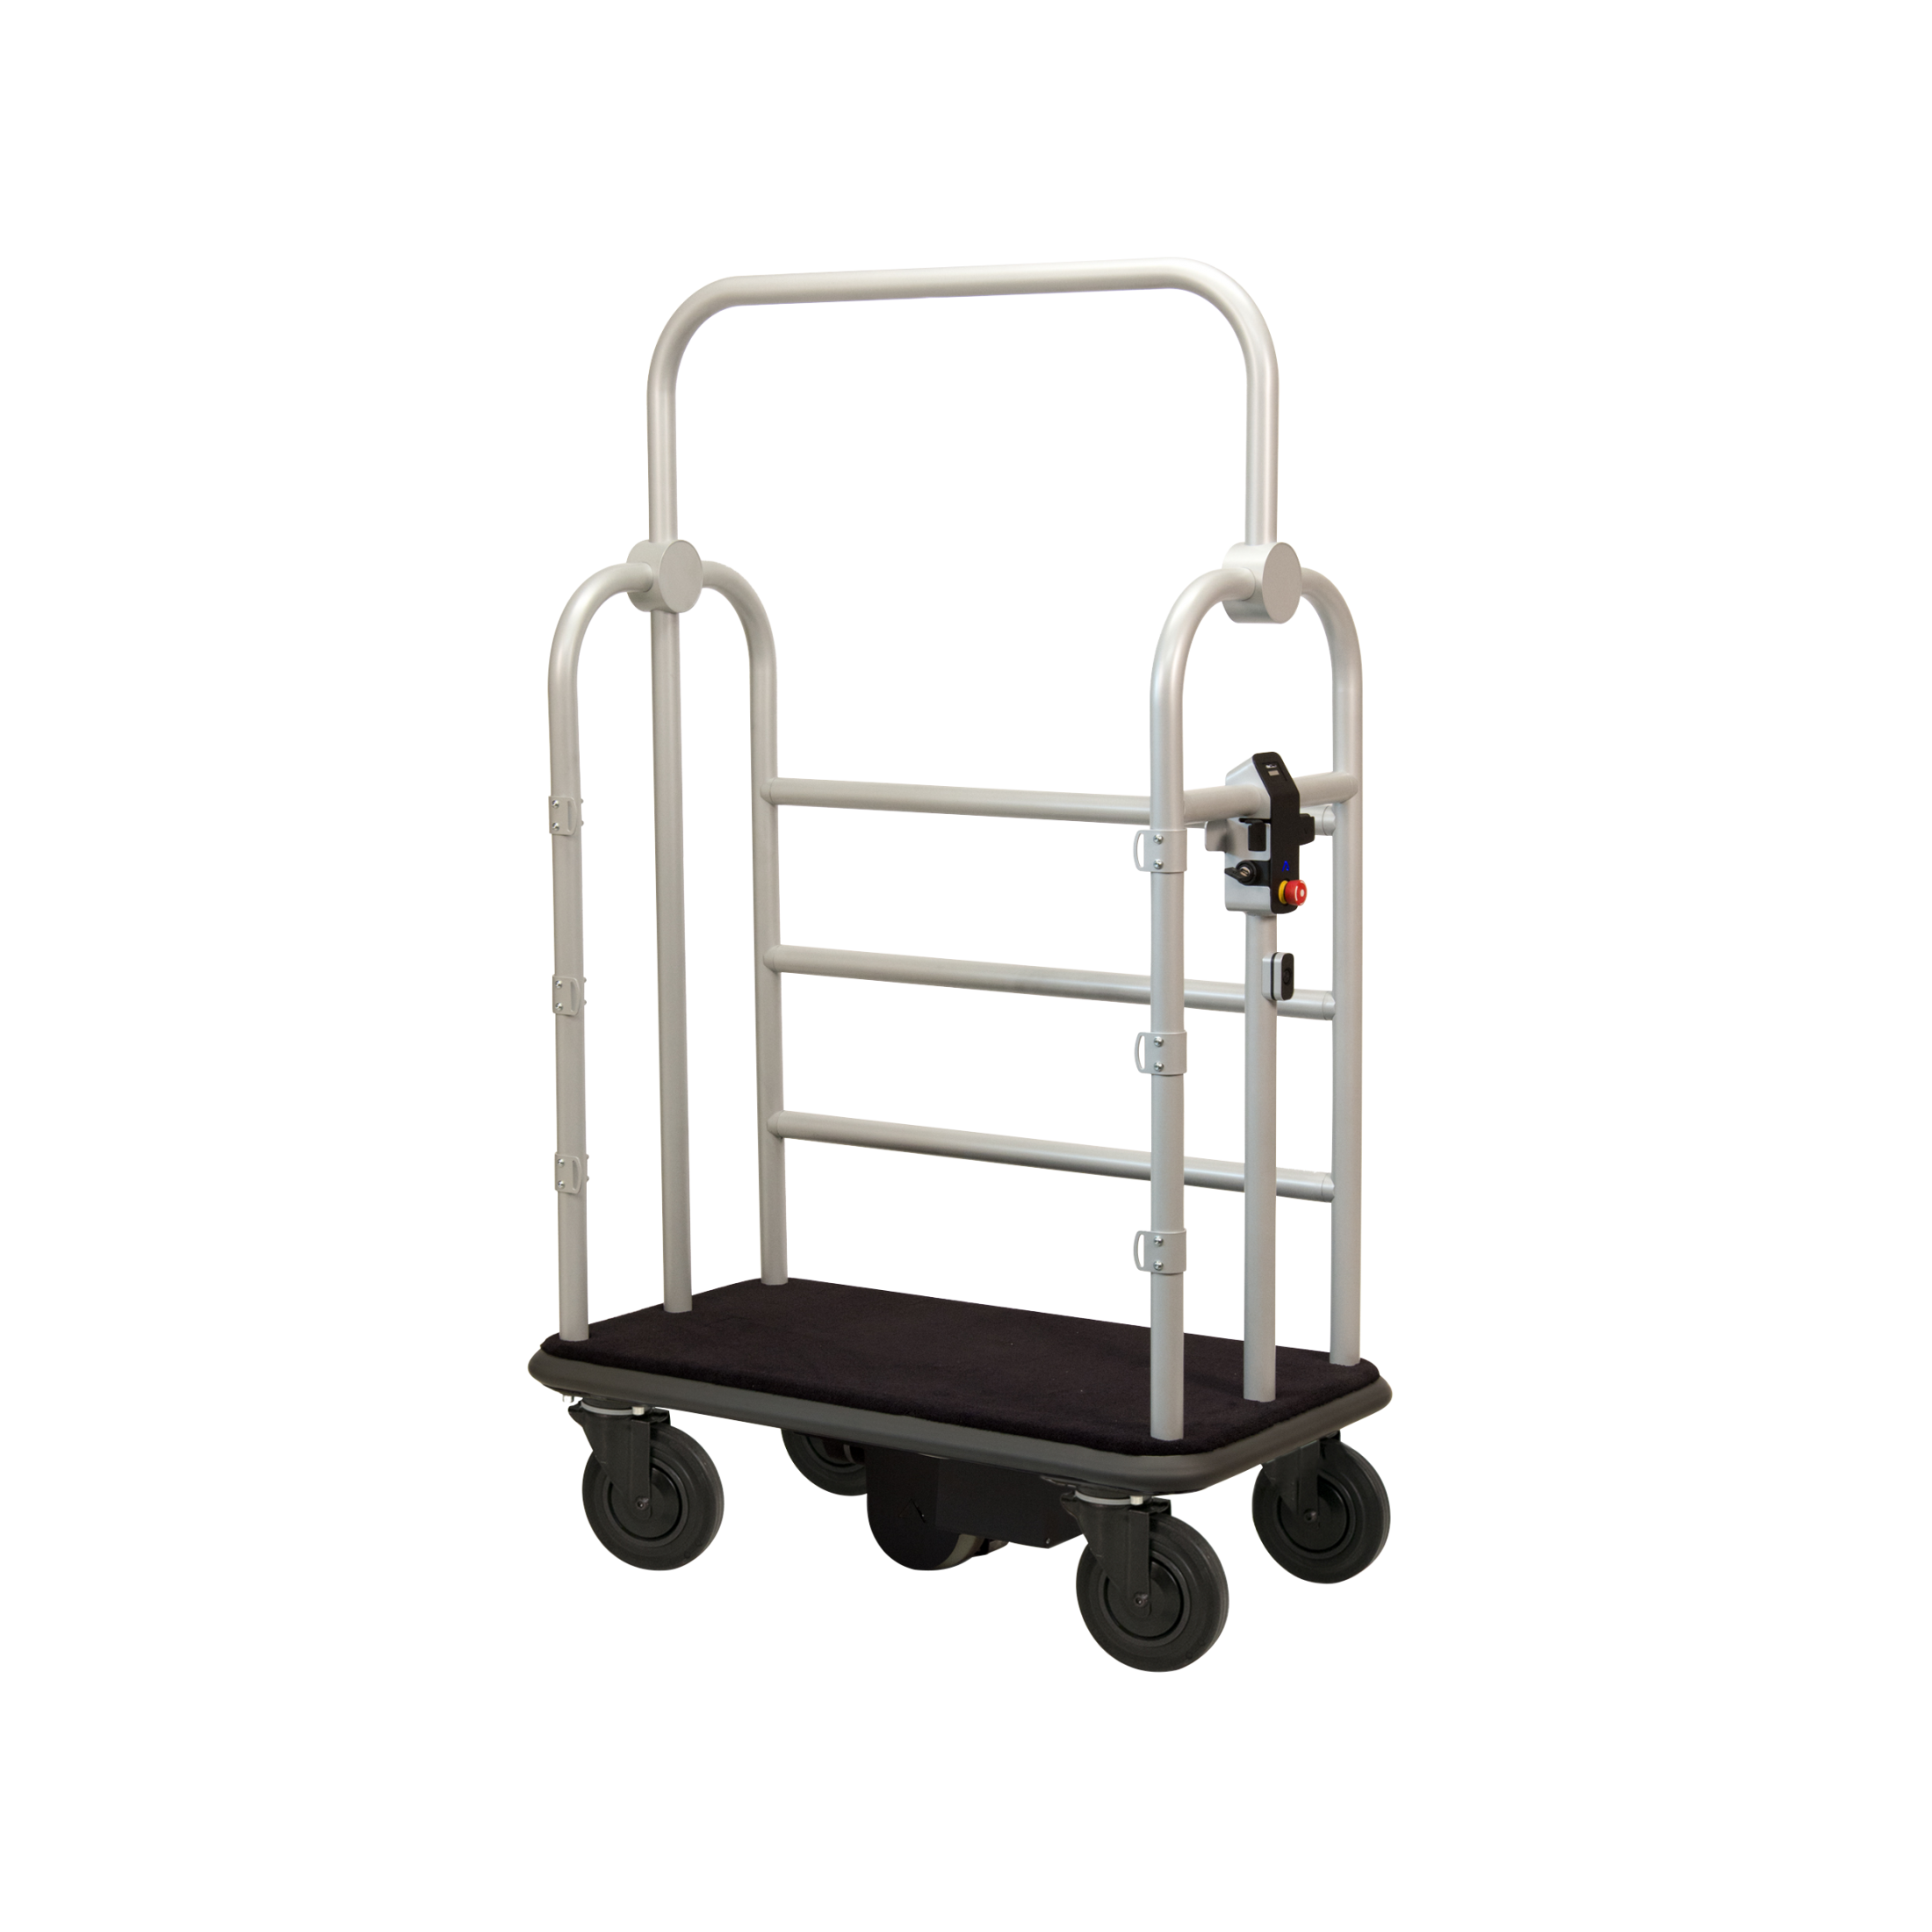 Vesuvio Airport 900 luggage trolley